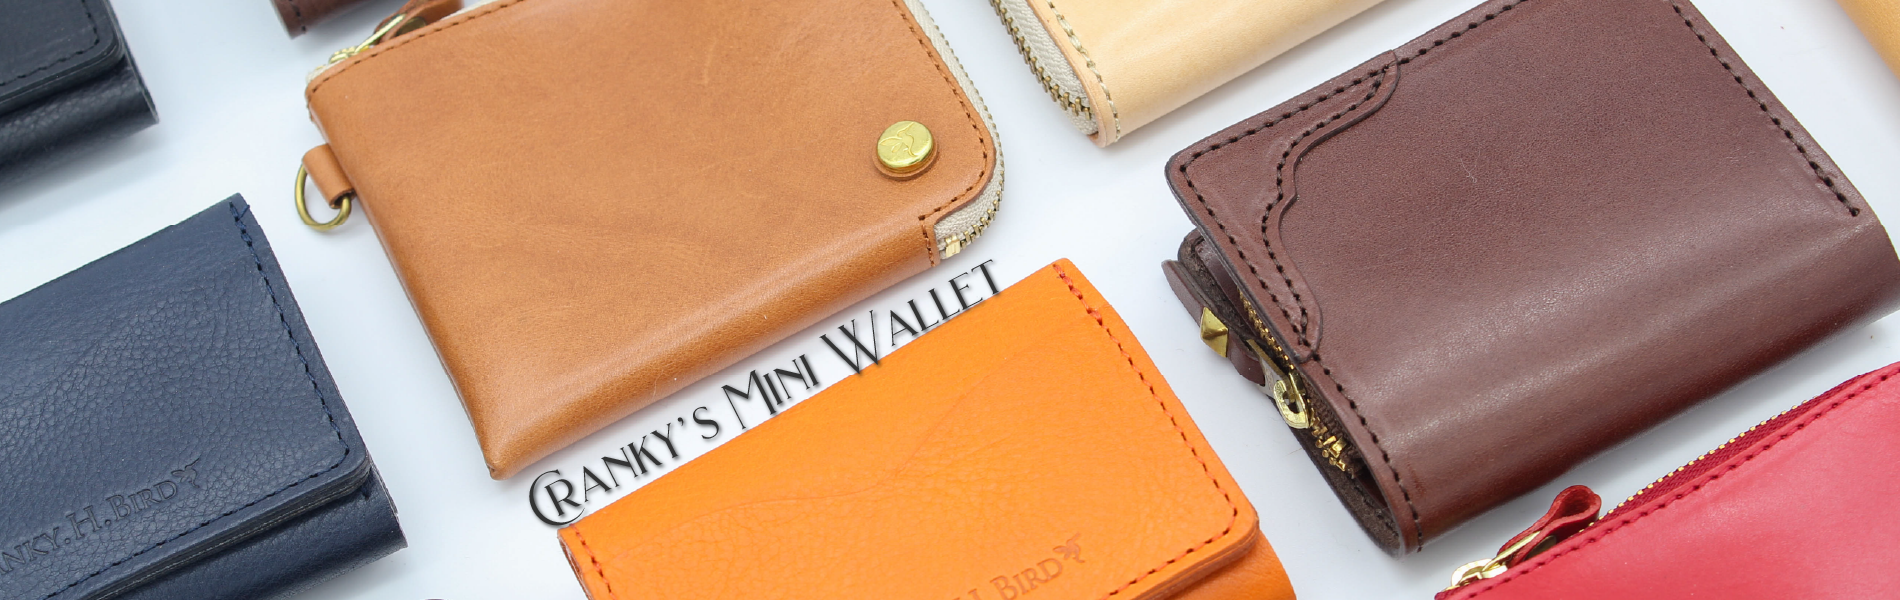 Cranky's Mini Wallet